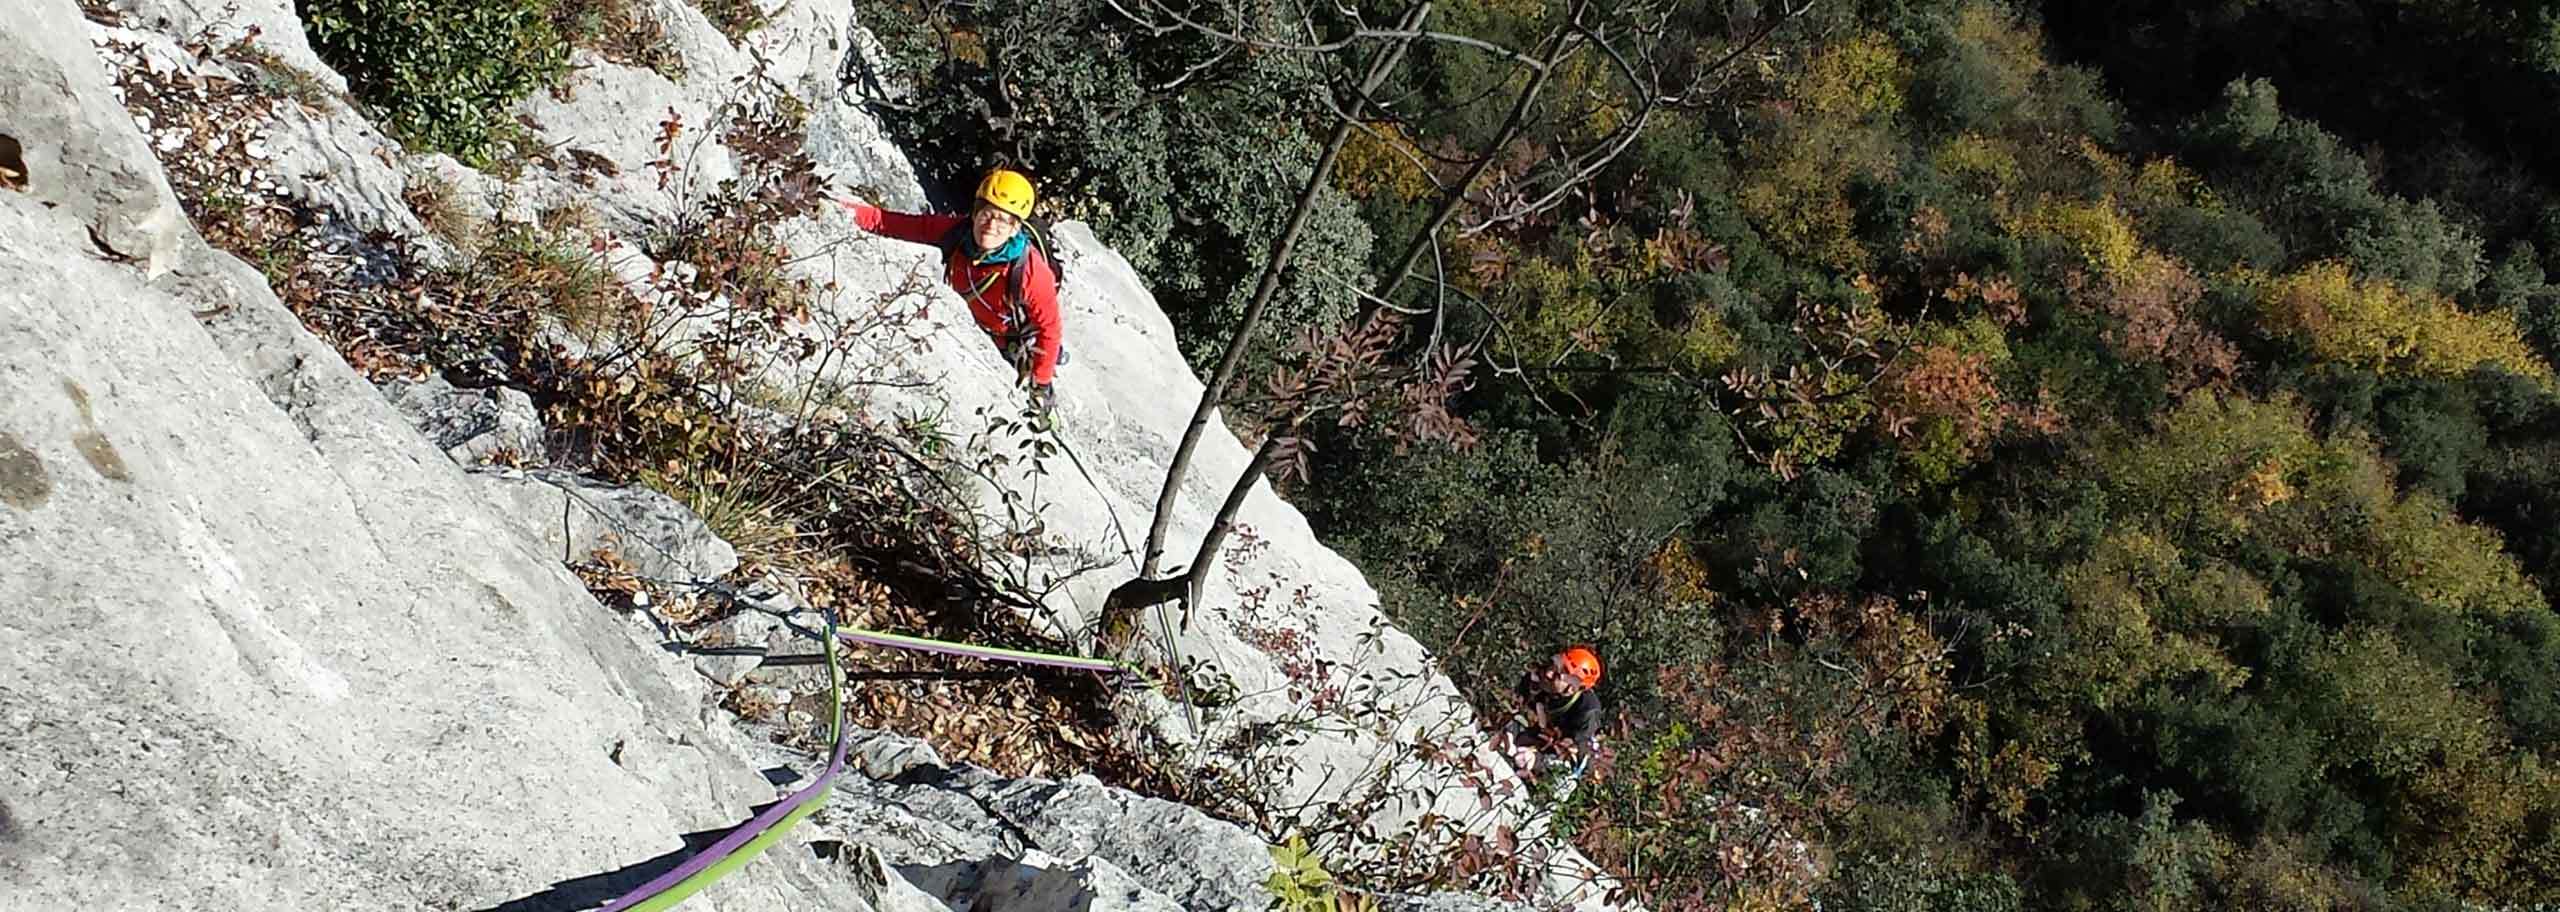 Rock Climbing in Gressoney, Trad and Sport Climbing